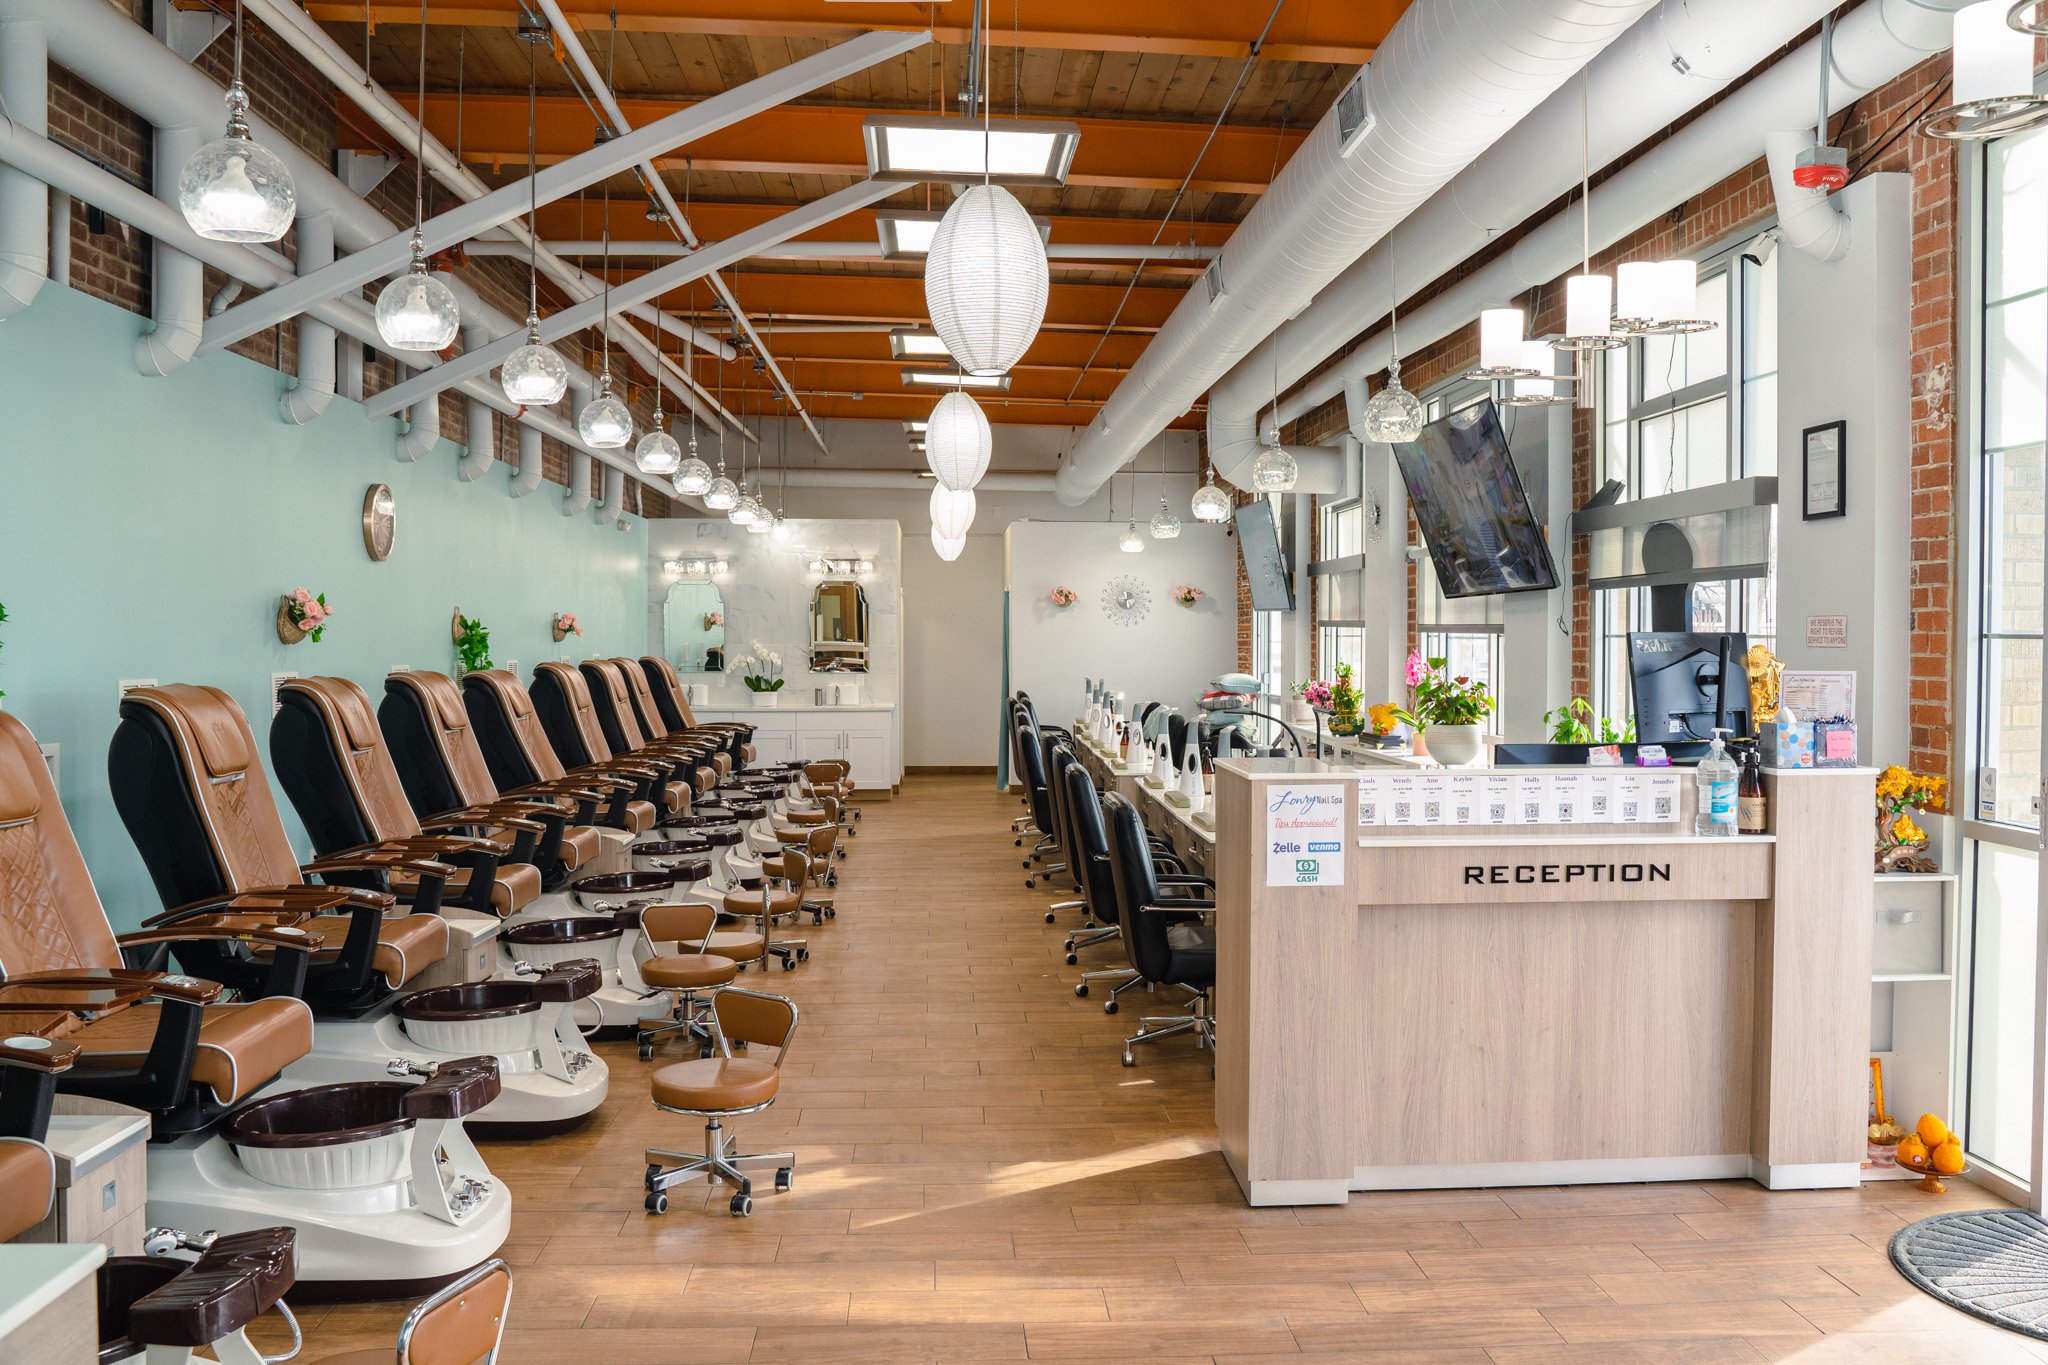 Smiley Nail Spa | Nail salon in Walnut Creek, CA 94596 | Manicure | Pedicure